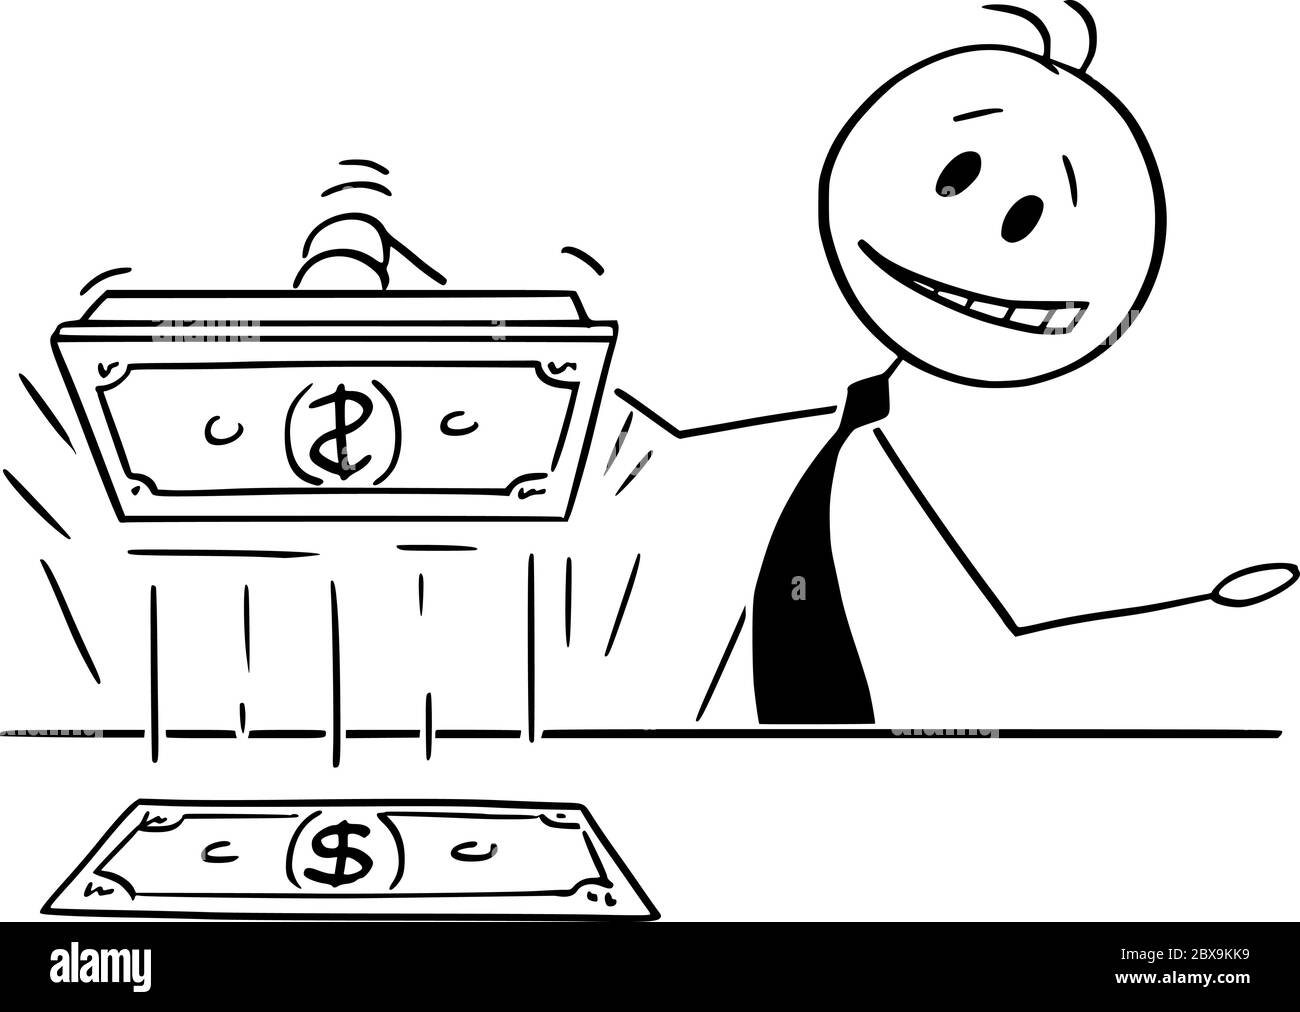 Vector cartoon stick figure drawing conceptual illustration of politician or banker printing cash money, Concept of quantitative easing or monetary politics. Stock Vector